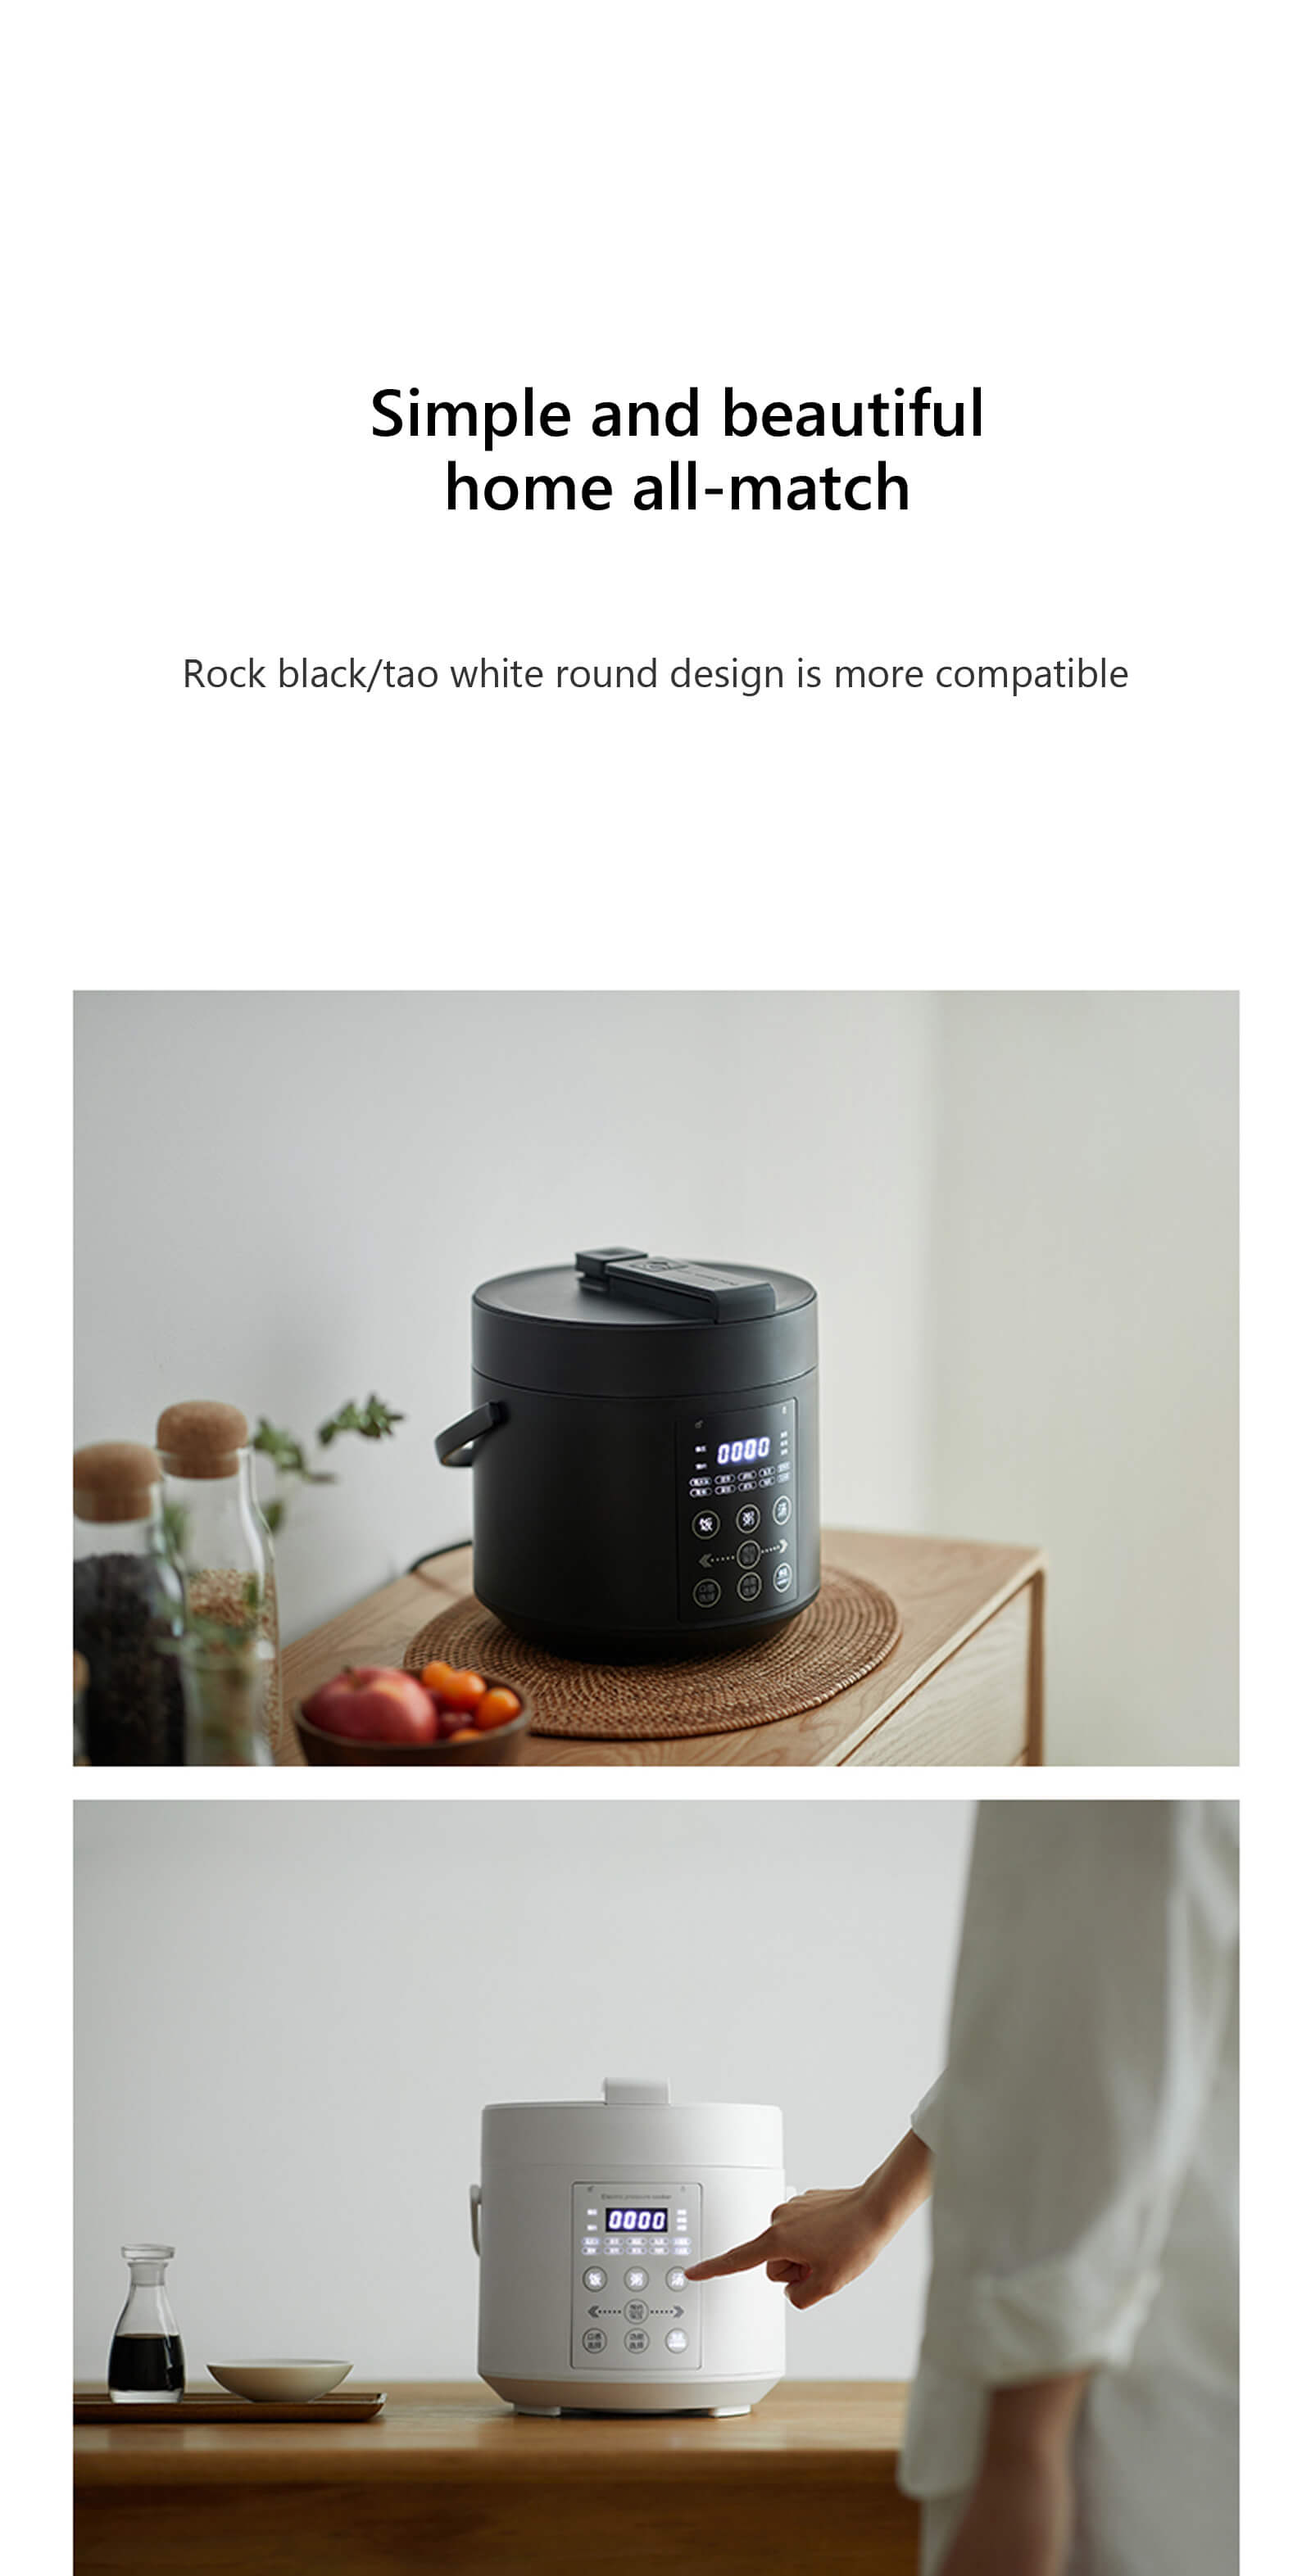 Olayks genuine original design electric pressure cooker for household small  mini intelligent 2L pressure cooker rice cooker